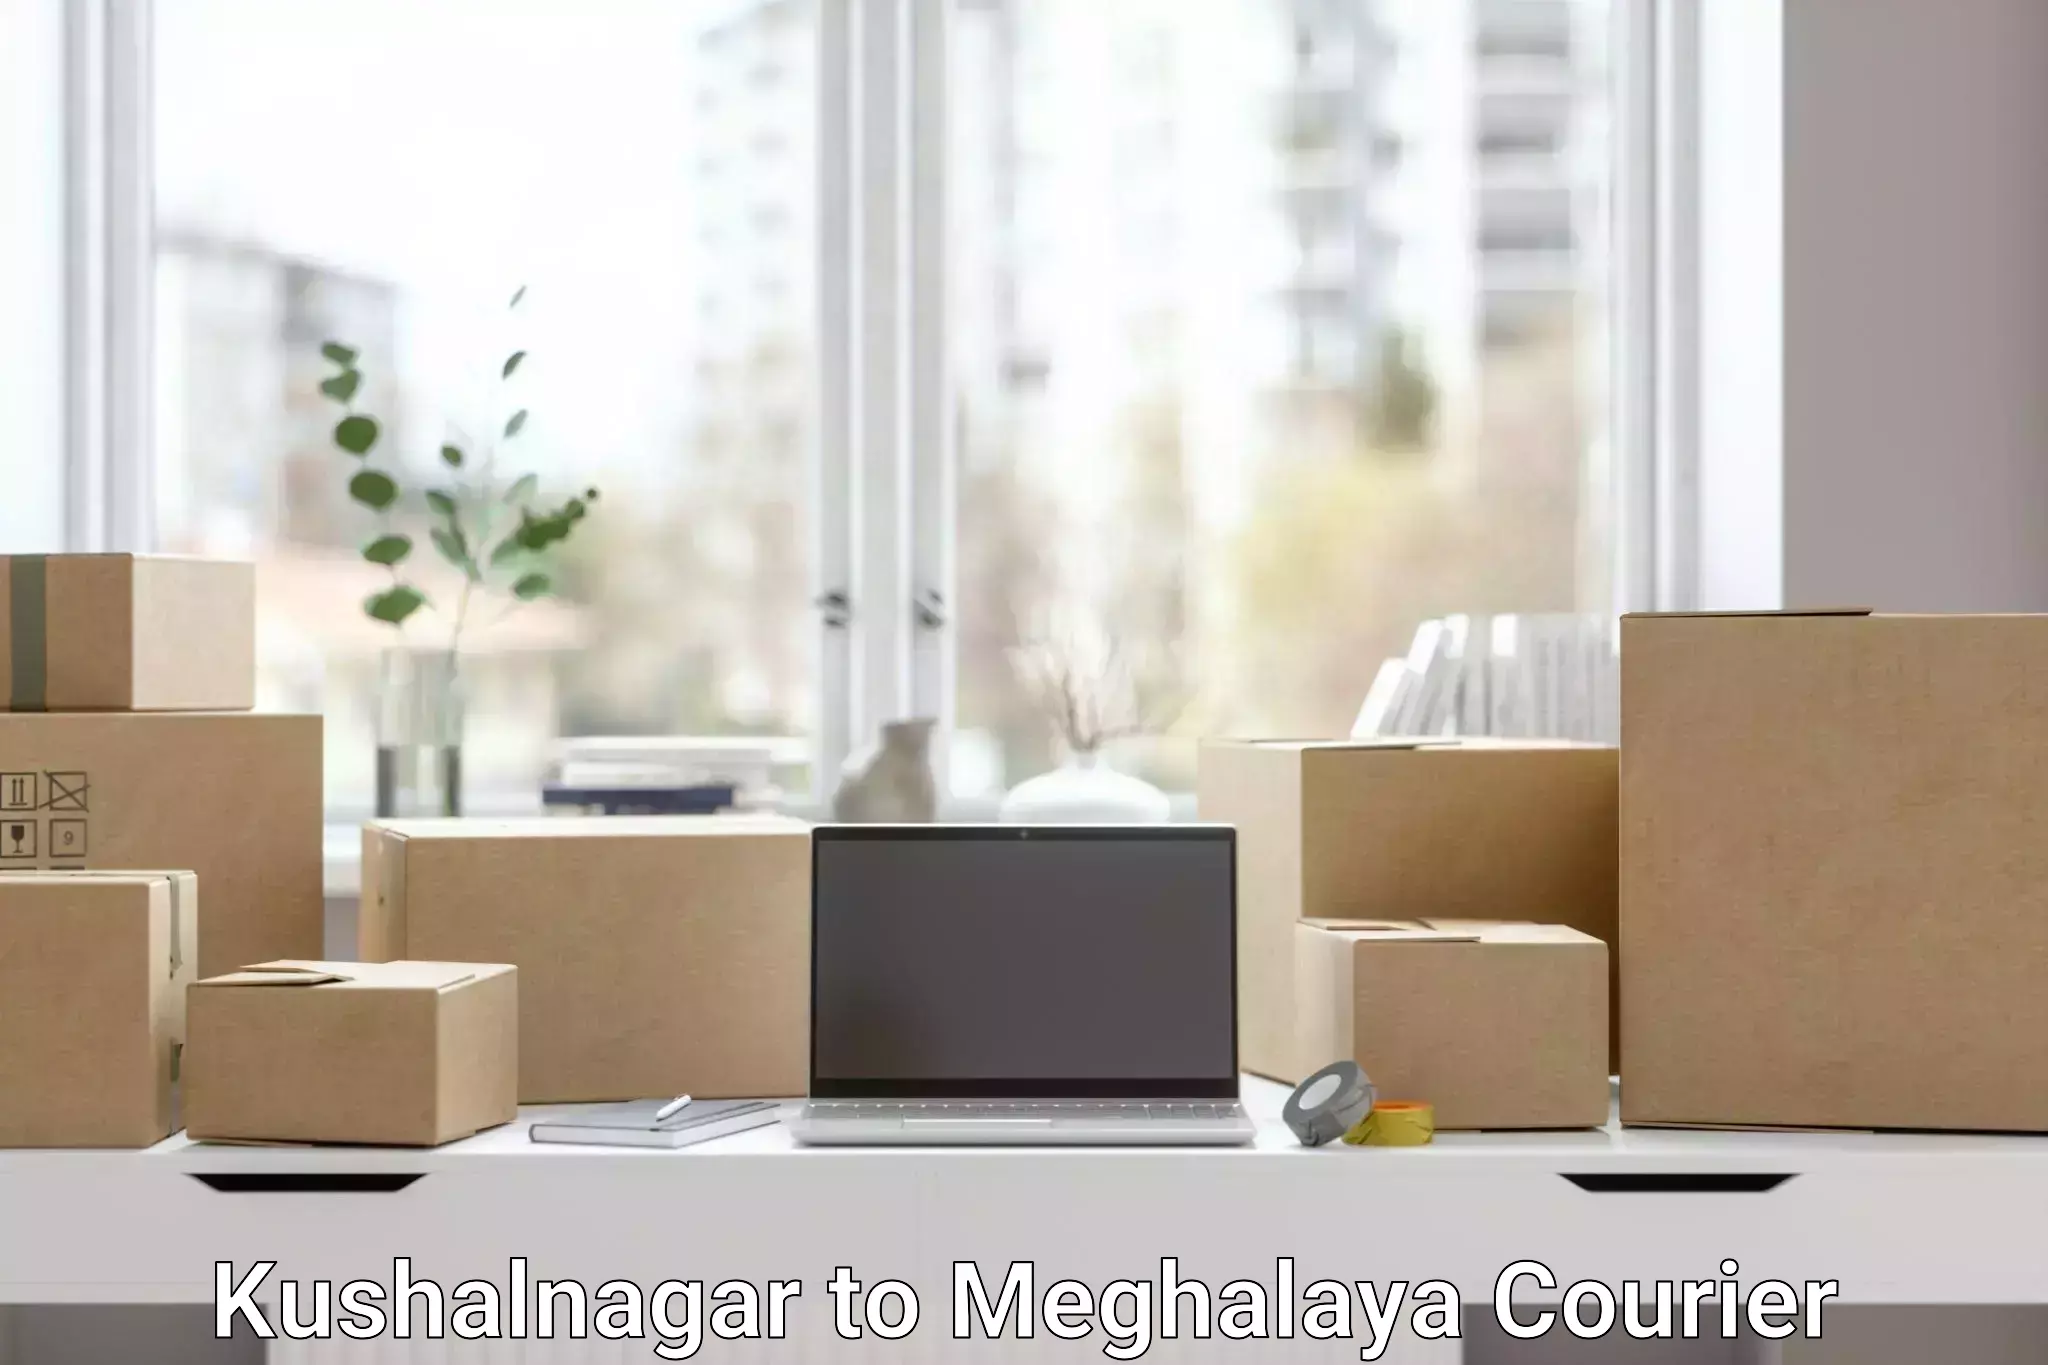 Courier service comparison Kushalnagar to Meghalaya